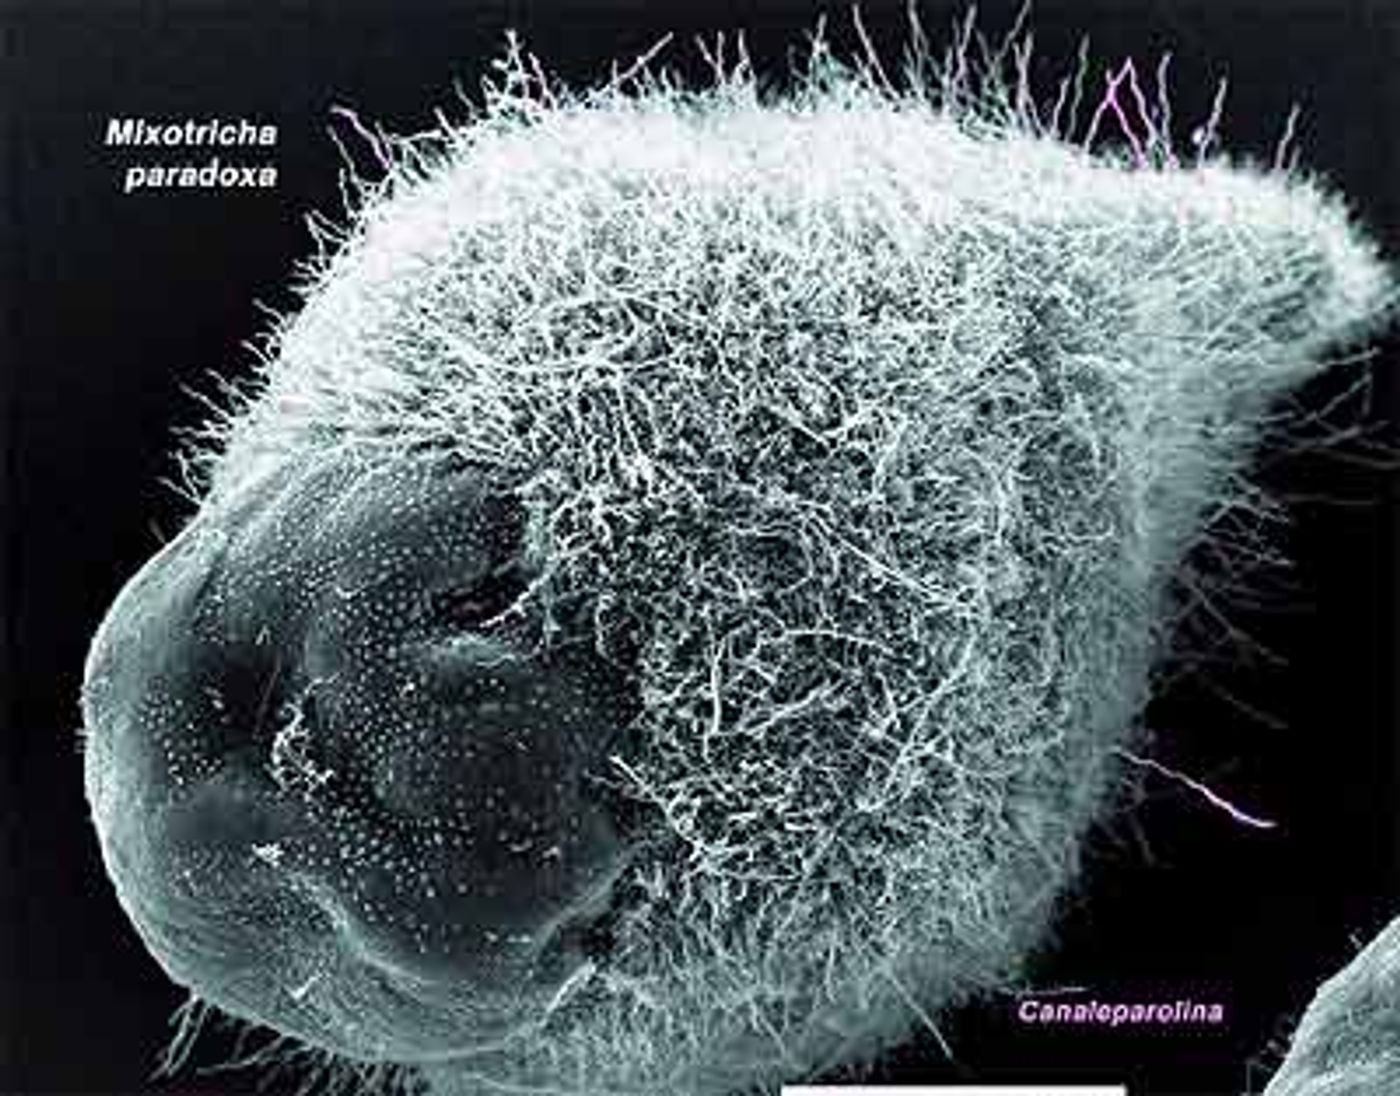 The "cilia" covering Mixotricha are actually bacteria. 